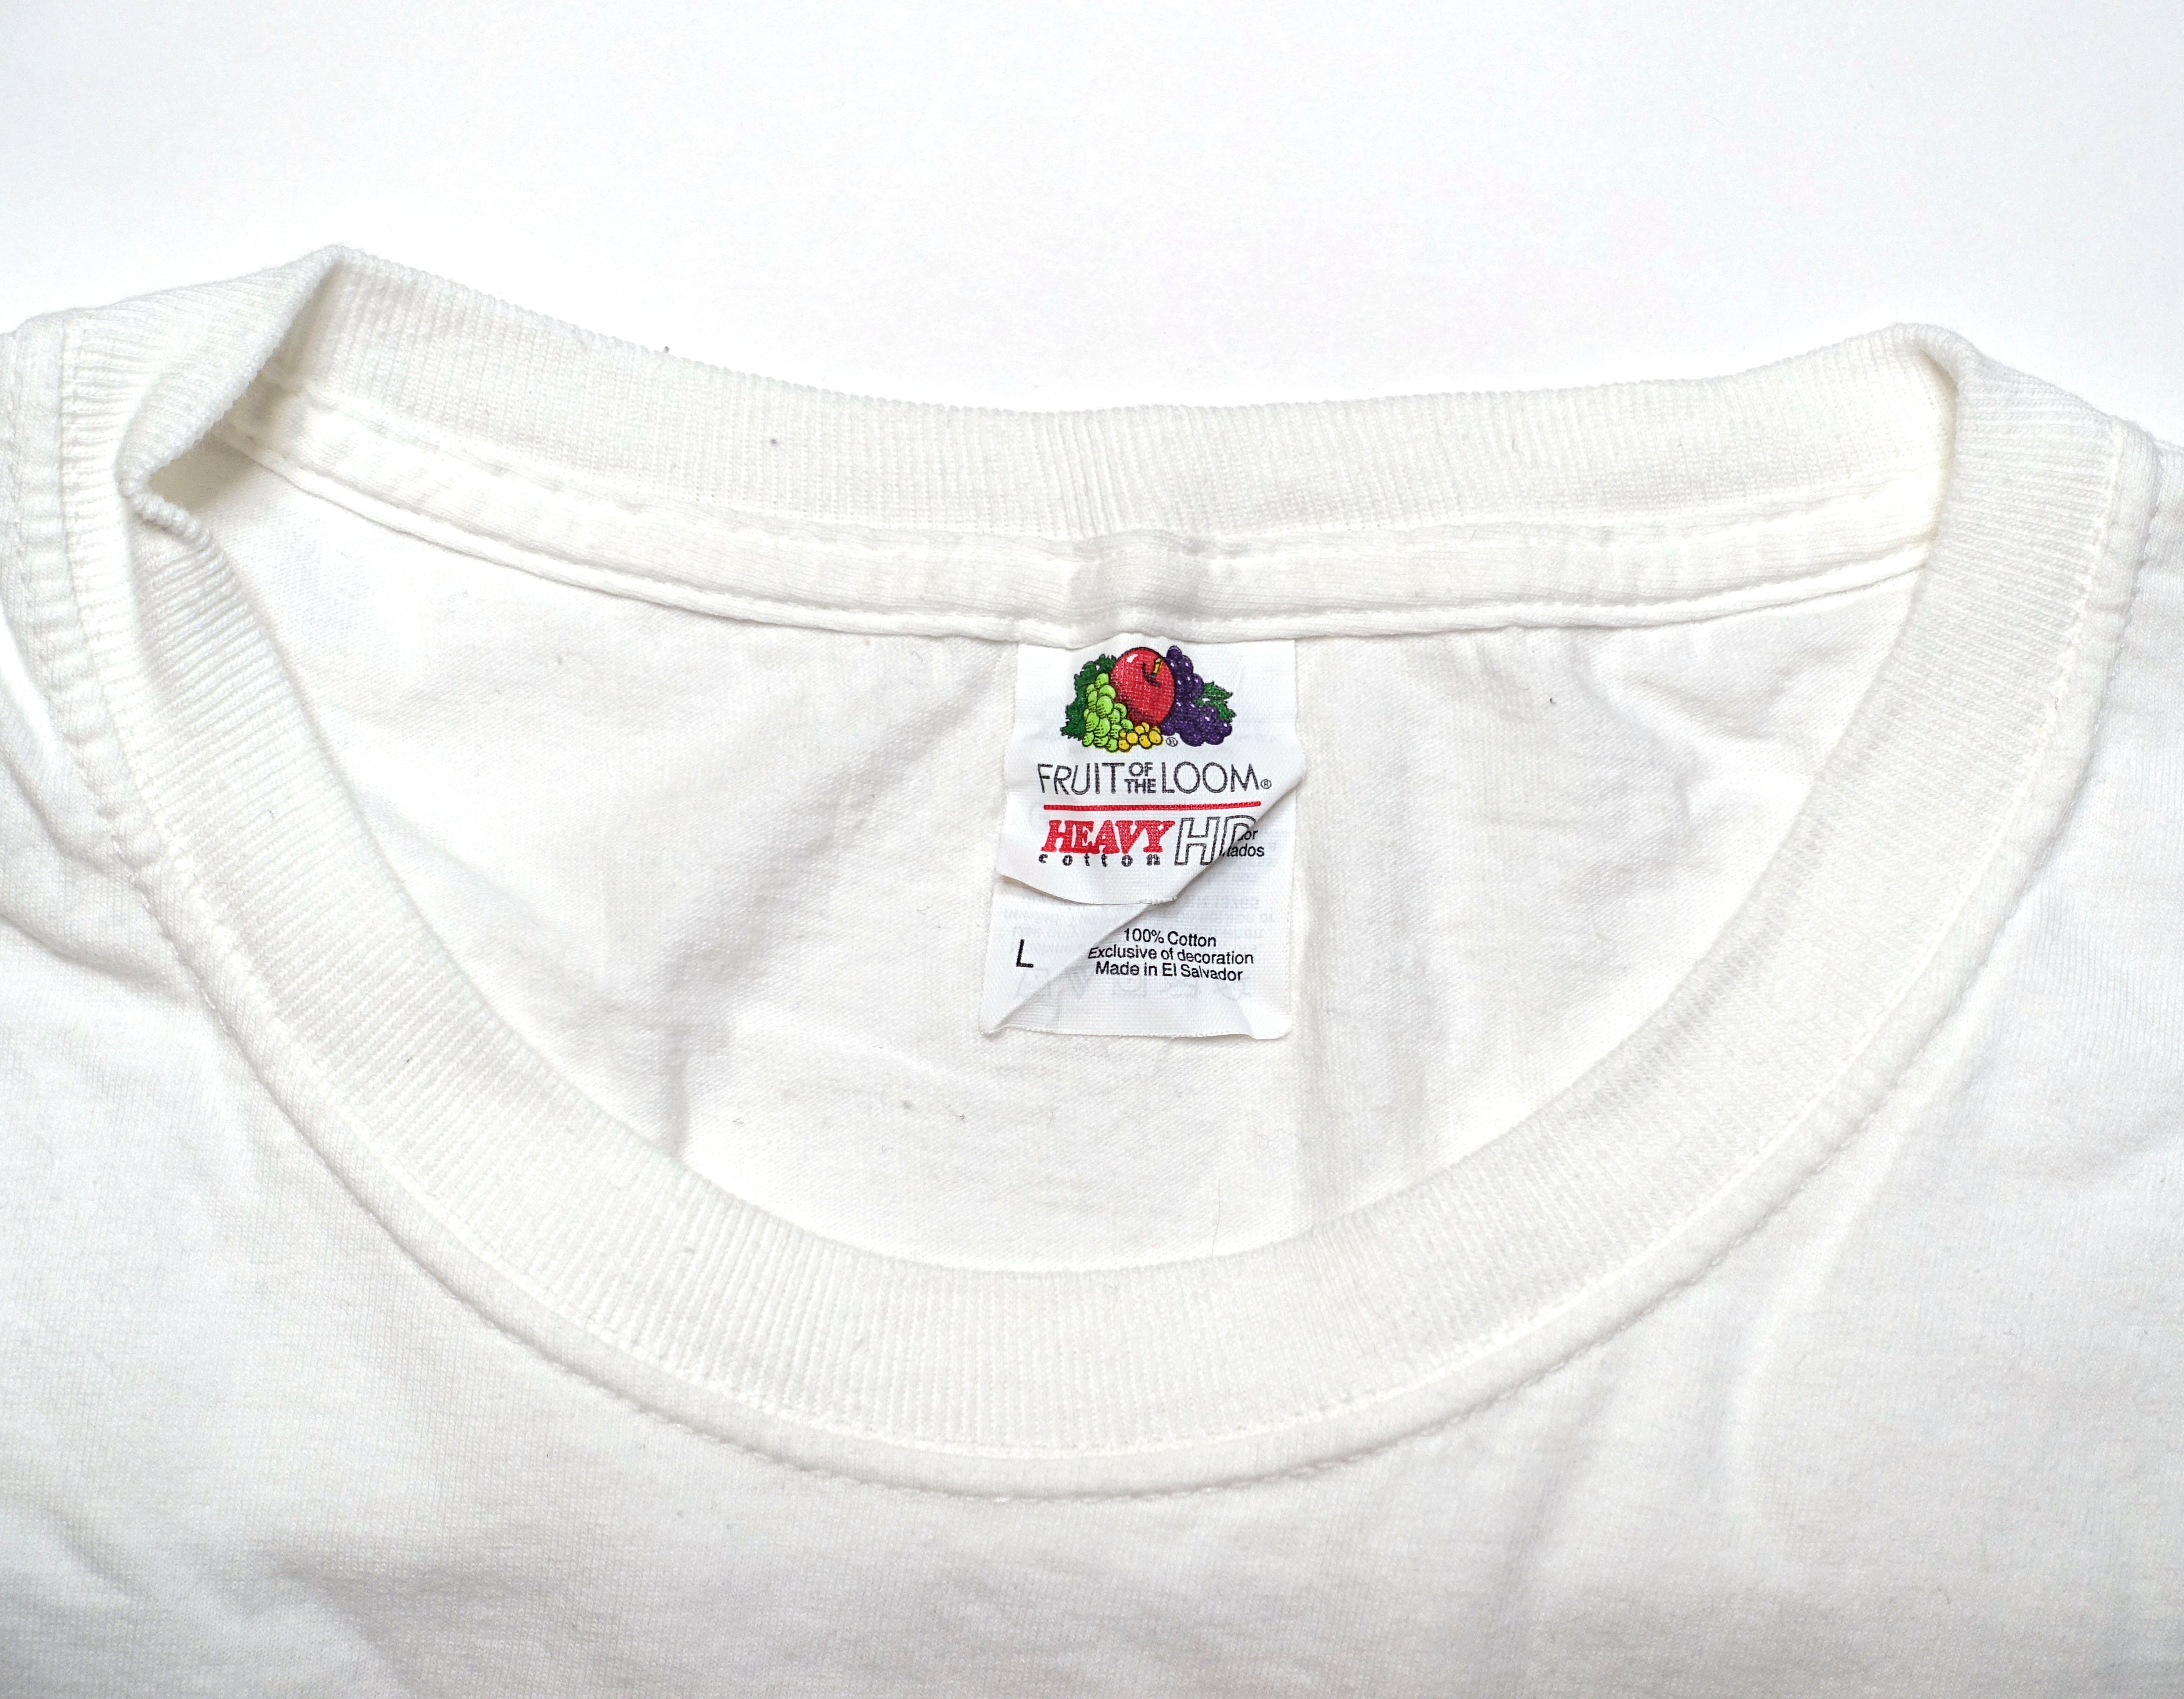 Ceremony – L-Shaped Man 2015 Tour Shirt Size Large (White)